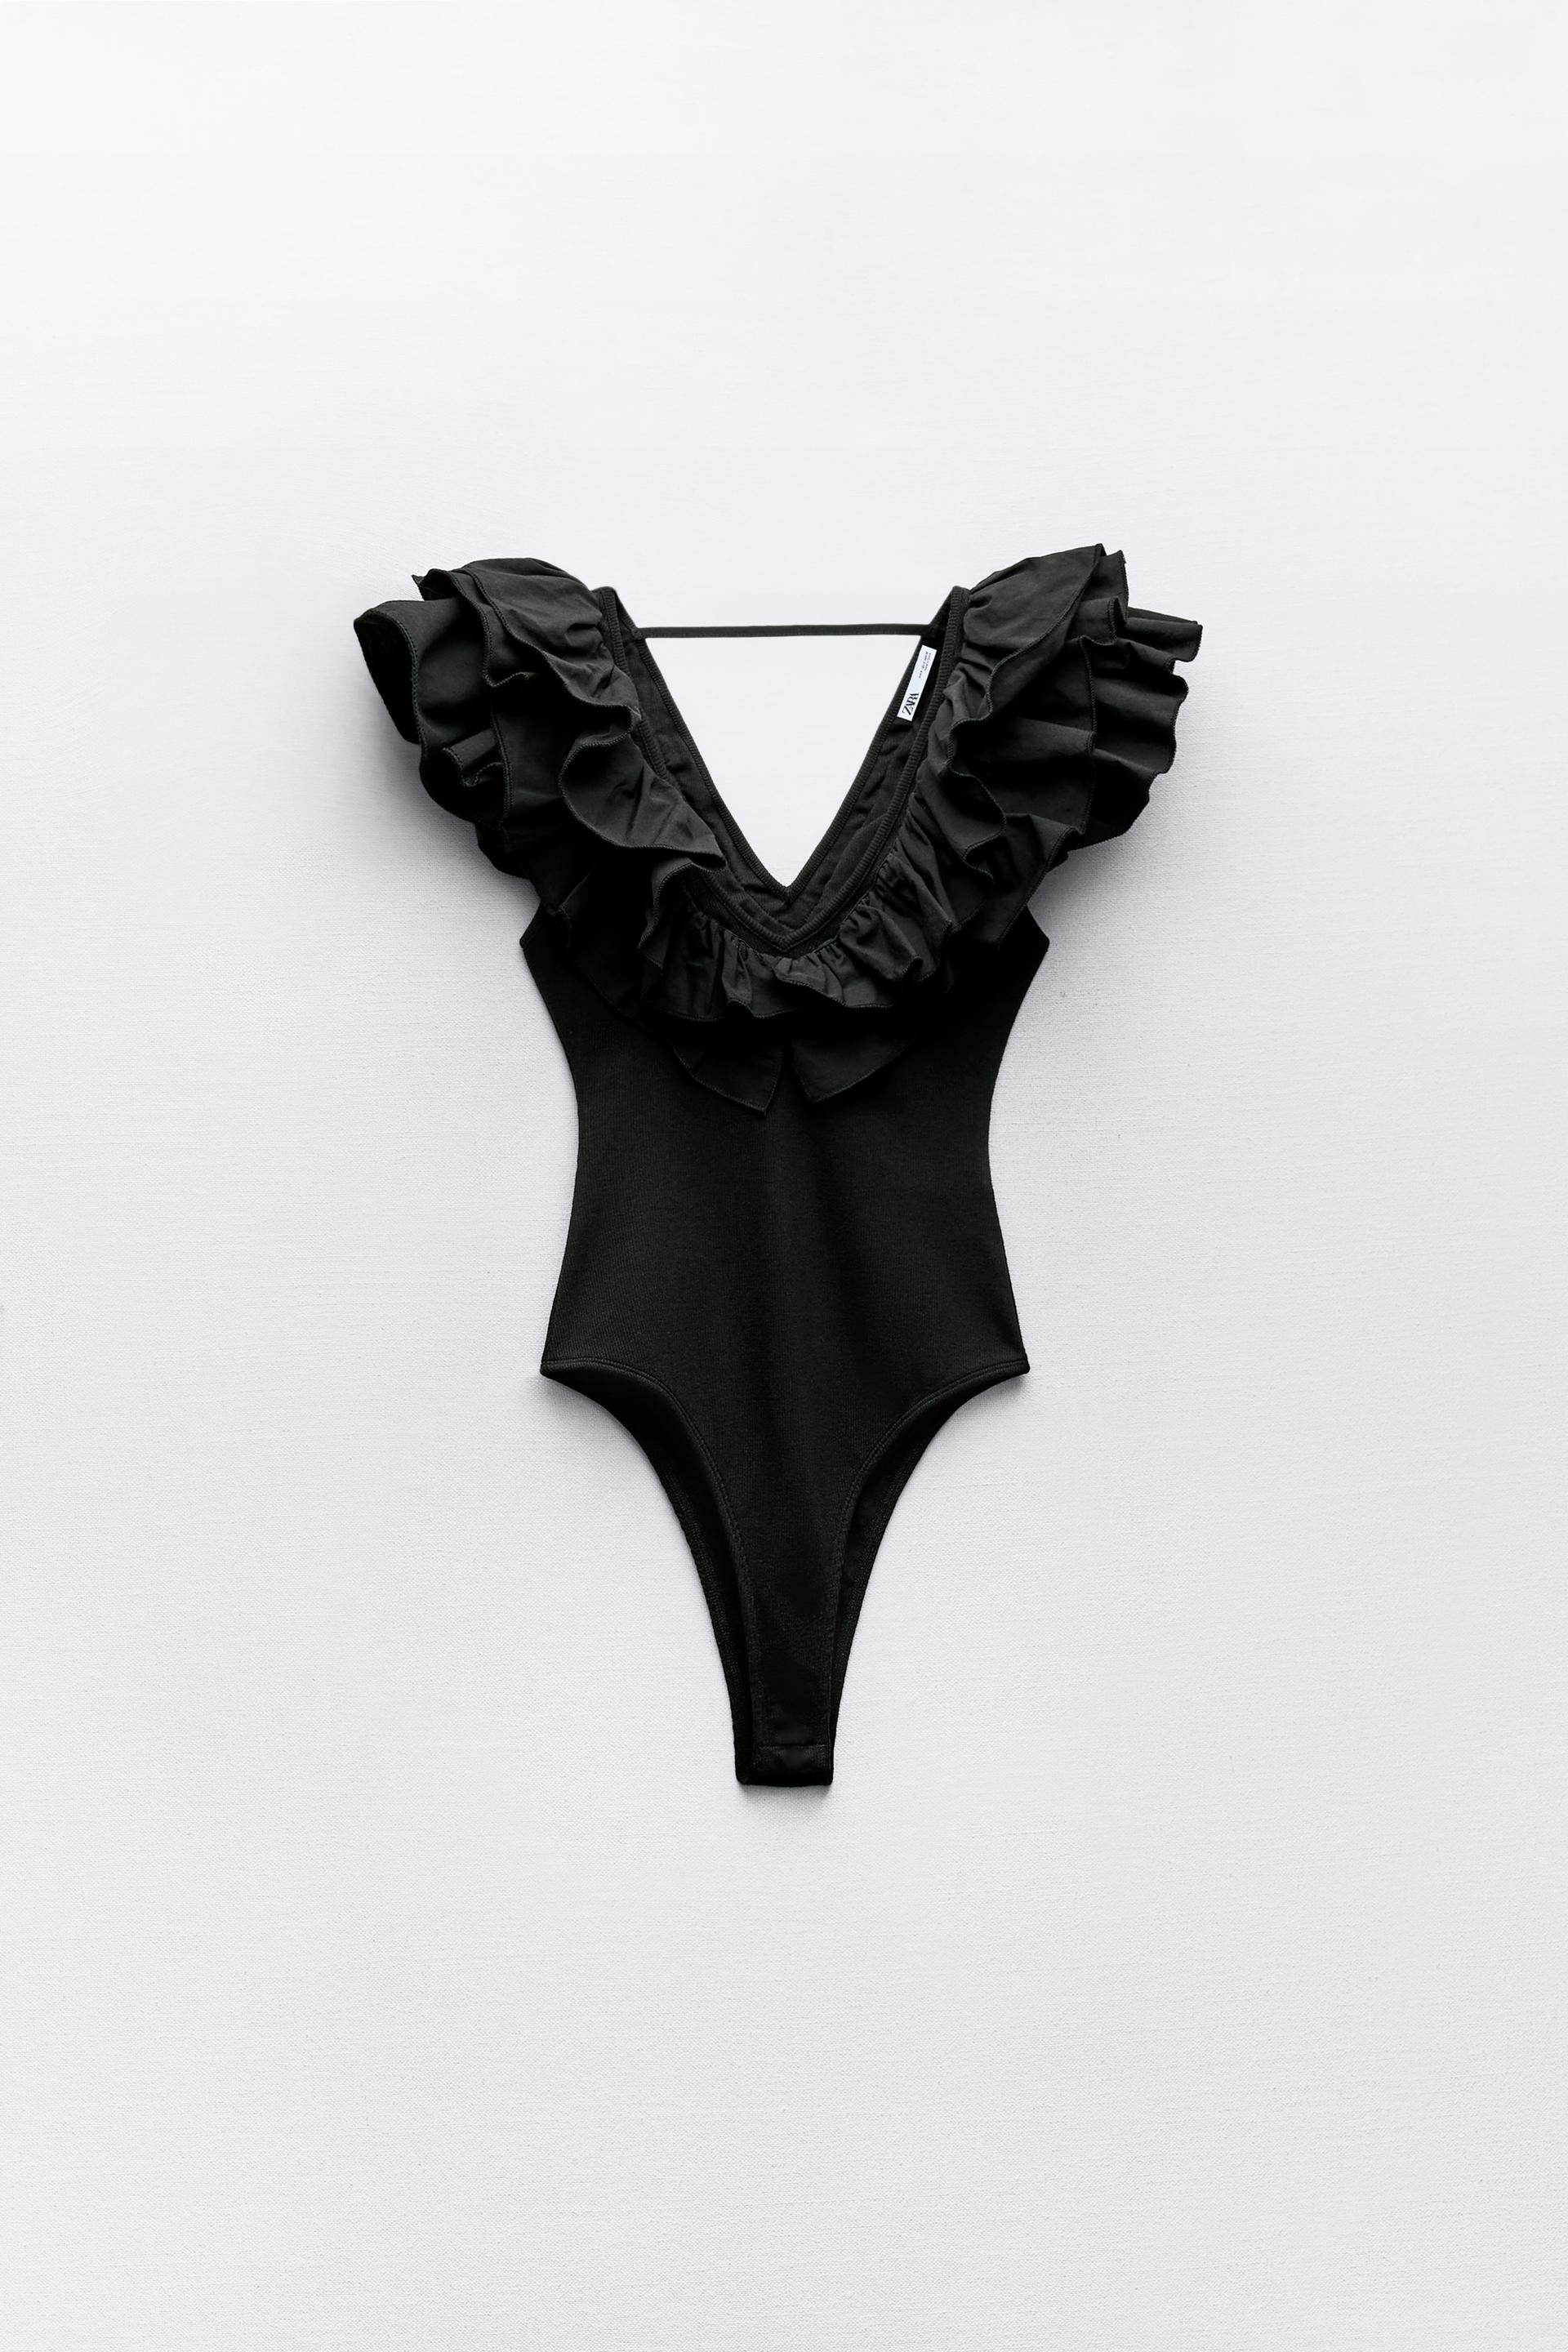 Zara, Tops, Zara Black Ribbed Bodysuit With Dramatic Ruffle Sleeves